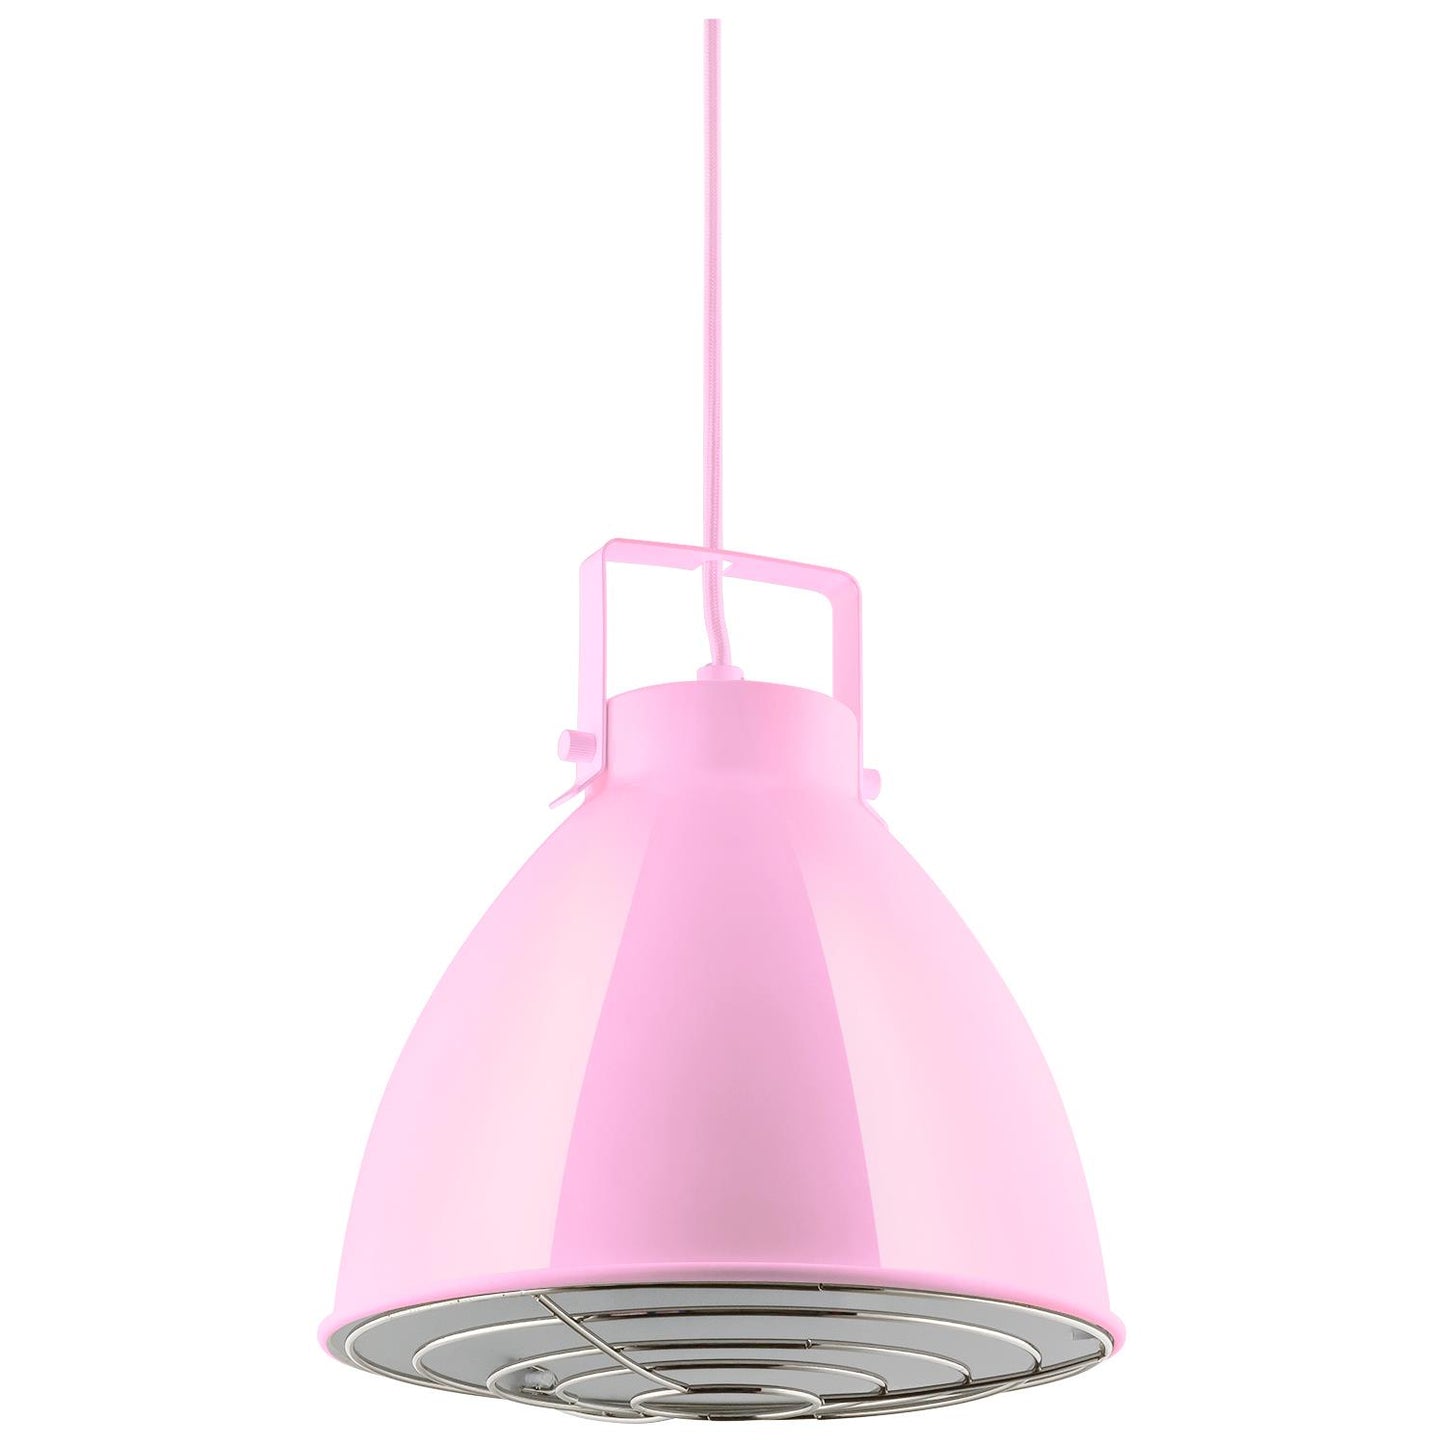 Sunlite CF/PD/Z/P Pink Zed Residential Ceiling Pendant Light Fixtures With Medium (E26) Base